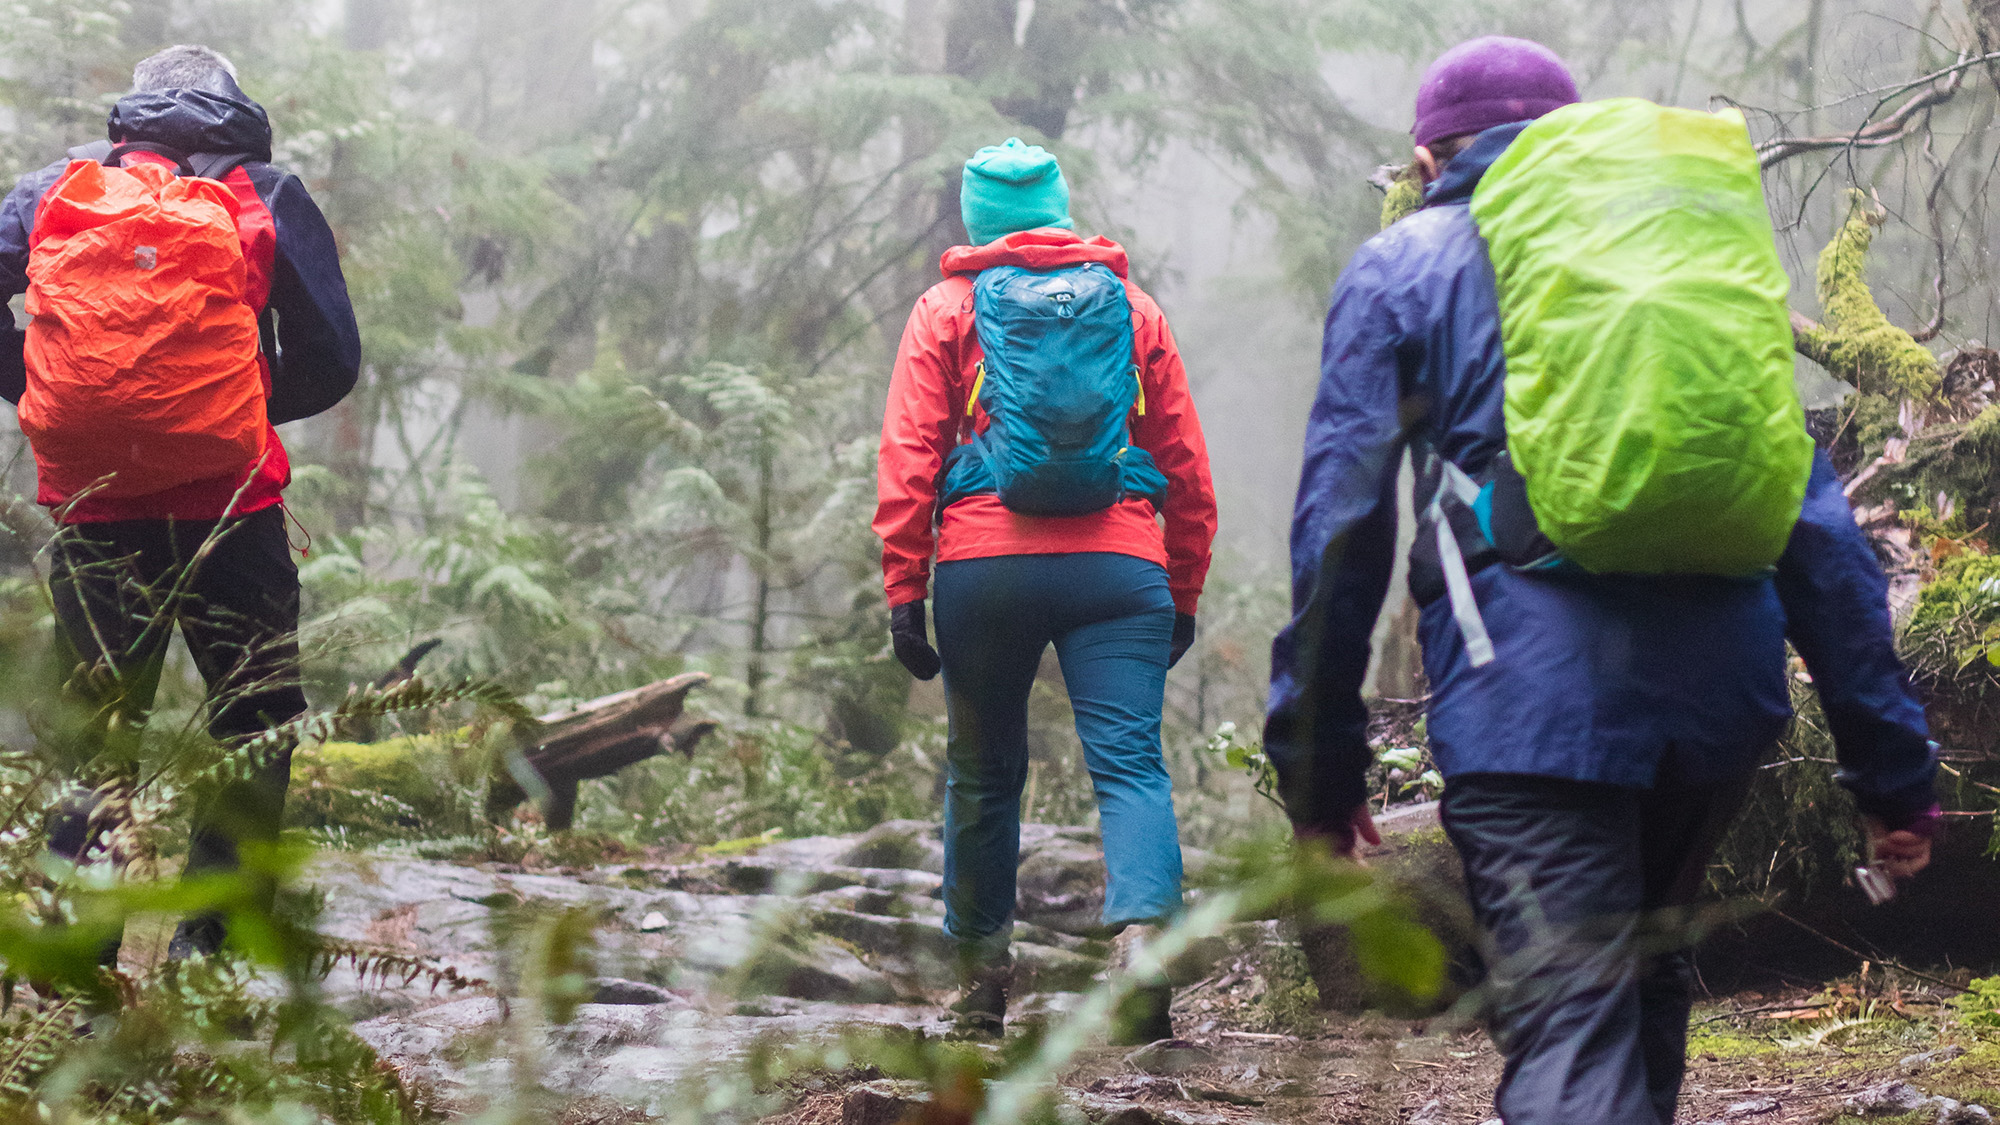 Three people hiking in the rain wearing raincoats.